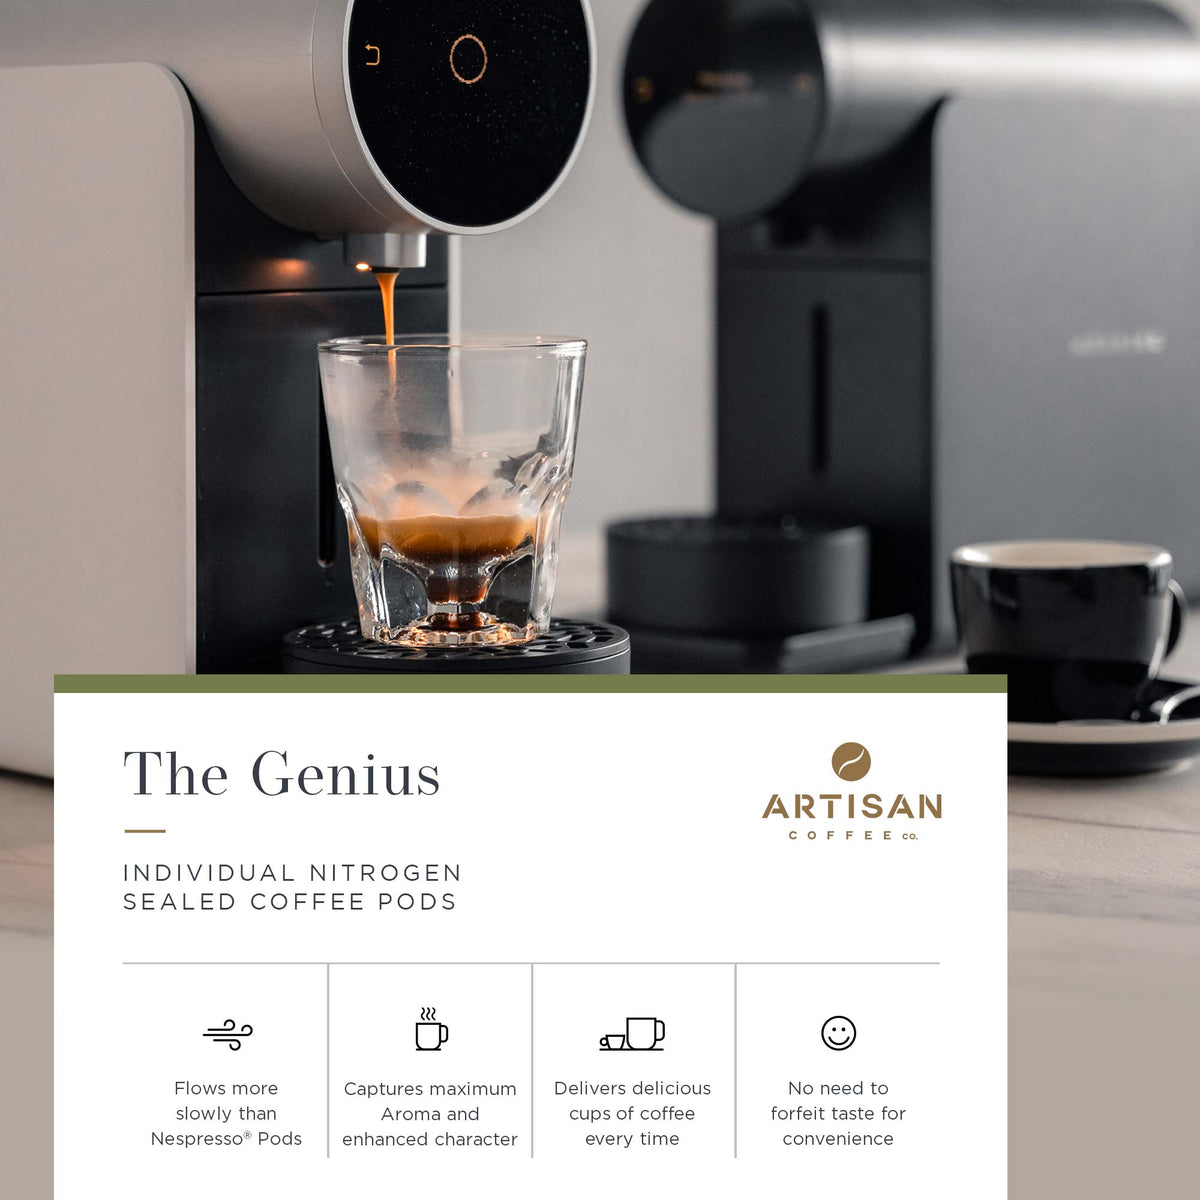 Artisan Coffee Co The Genius Pods Infographic Nitrogen Sealed